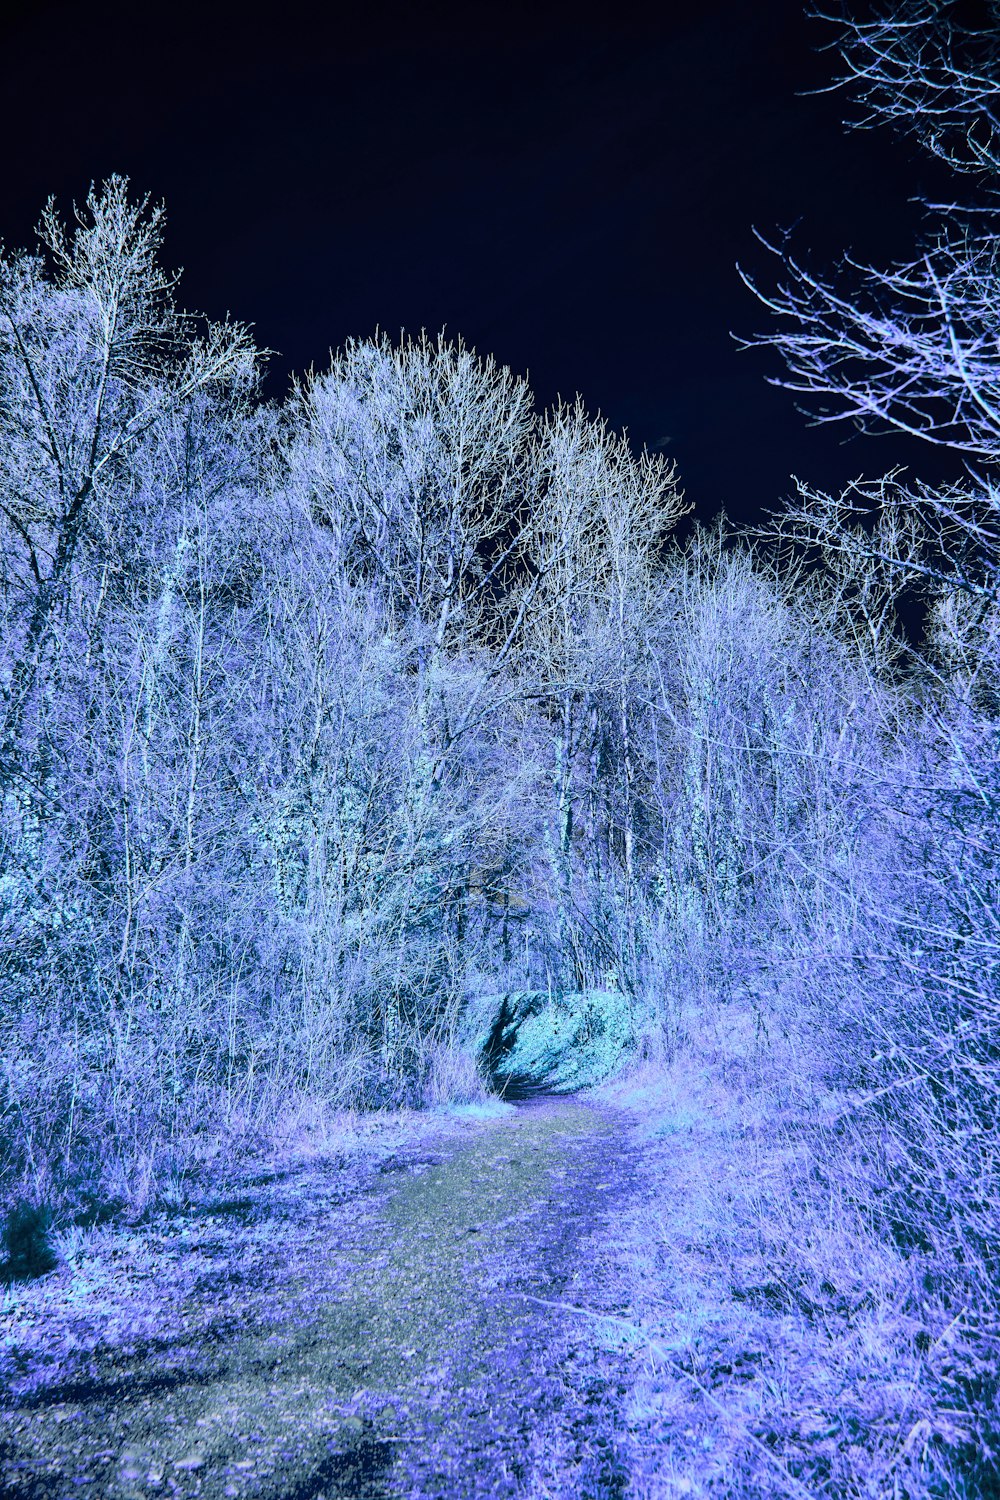 Un camino en el bosque iluminado con luces azules